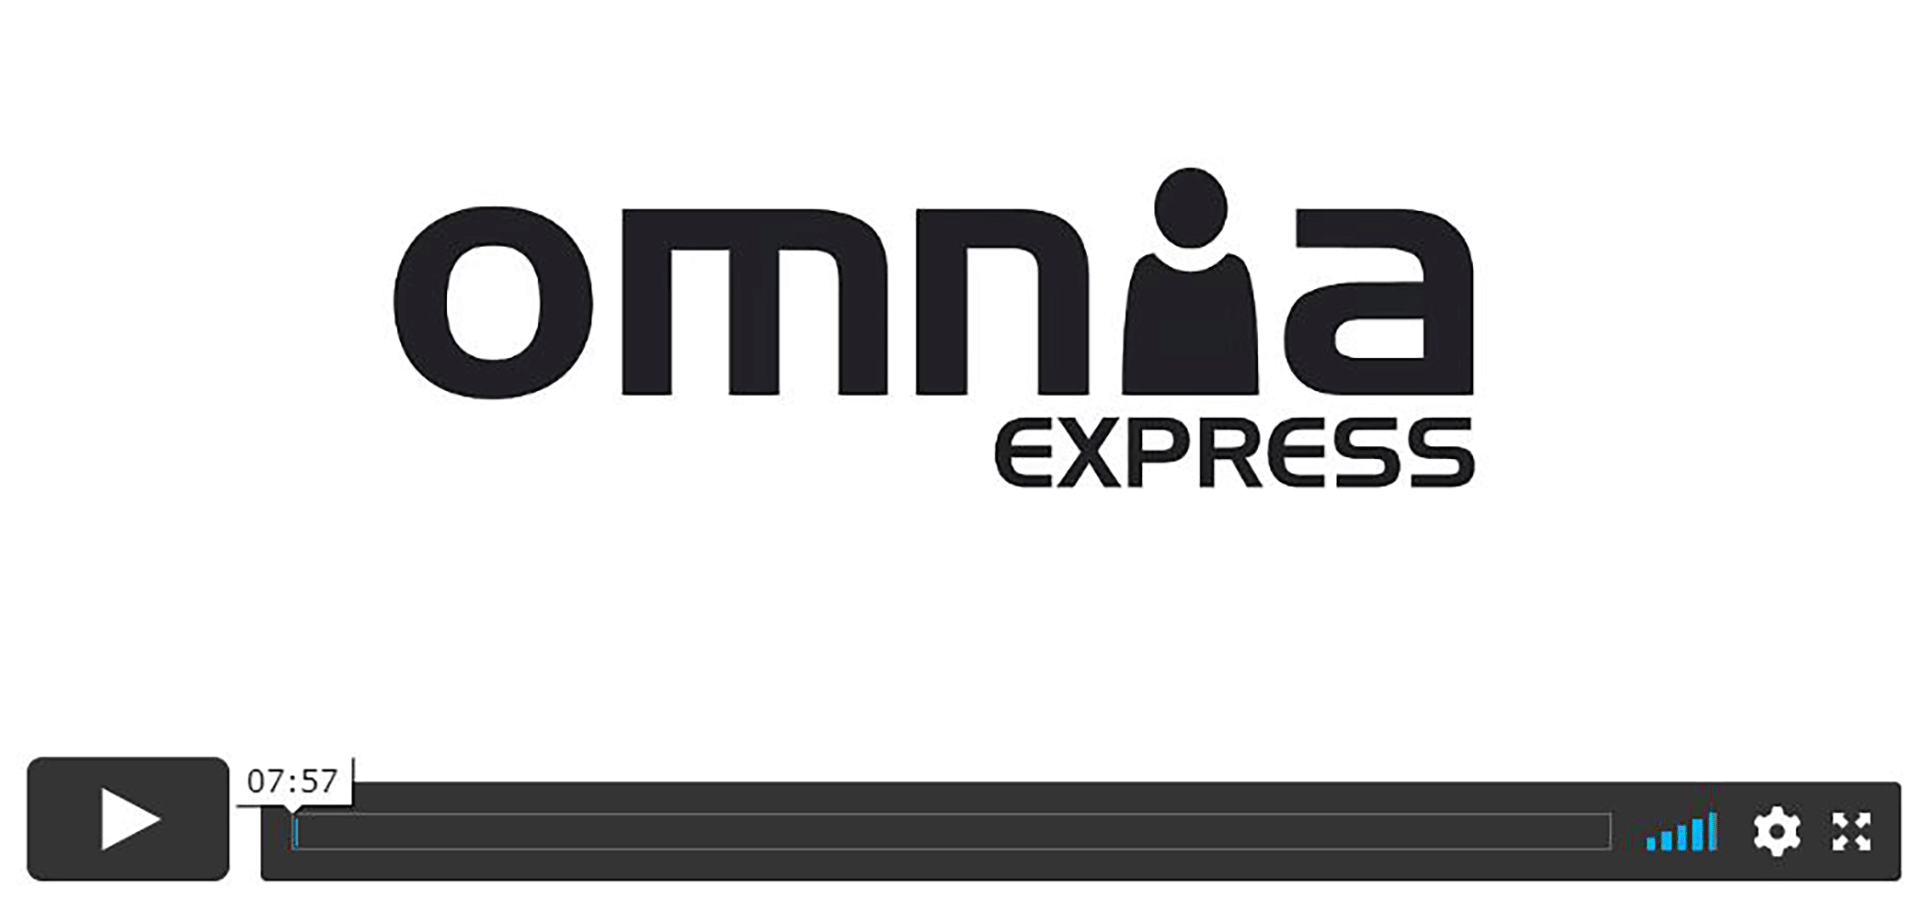 Omnia-express-video